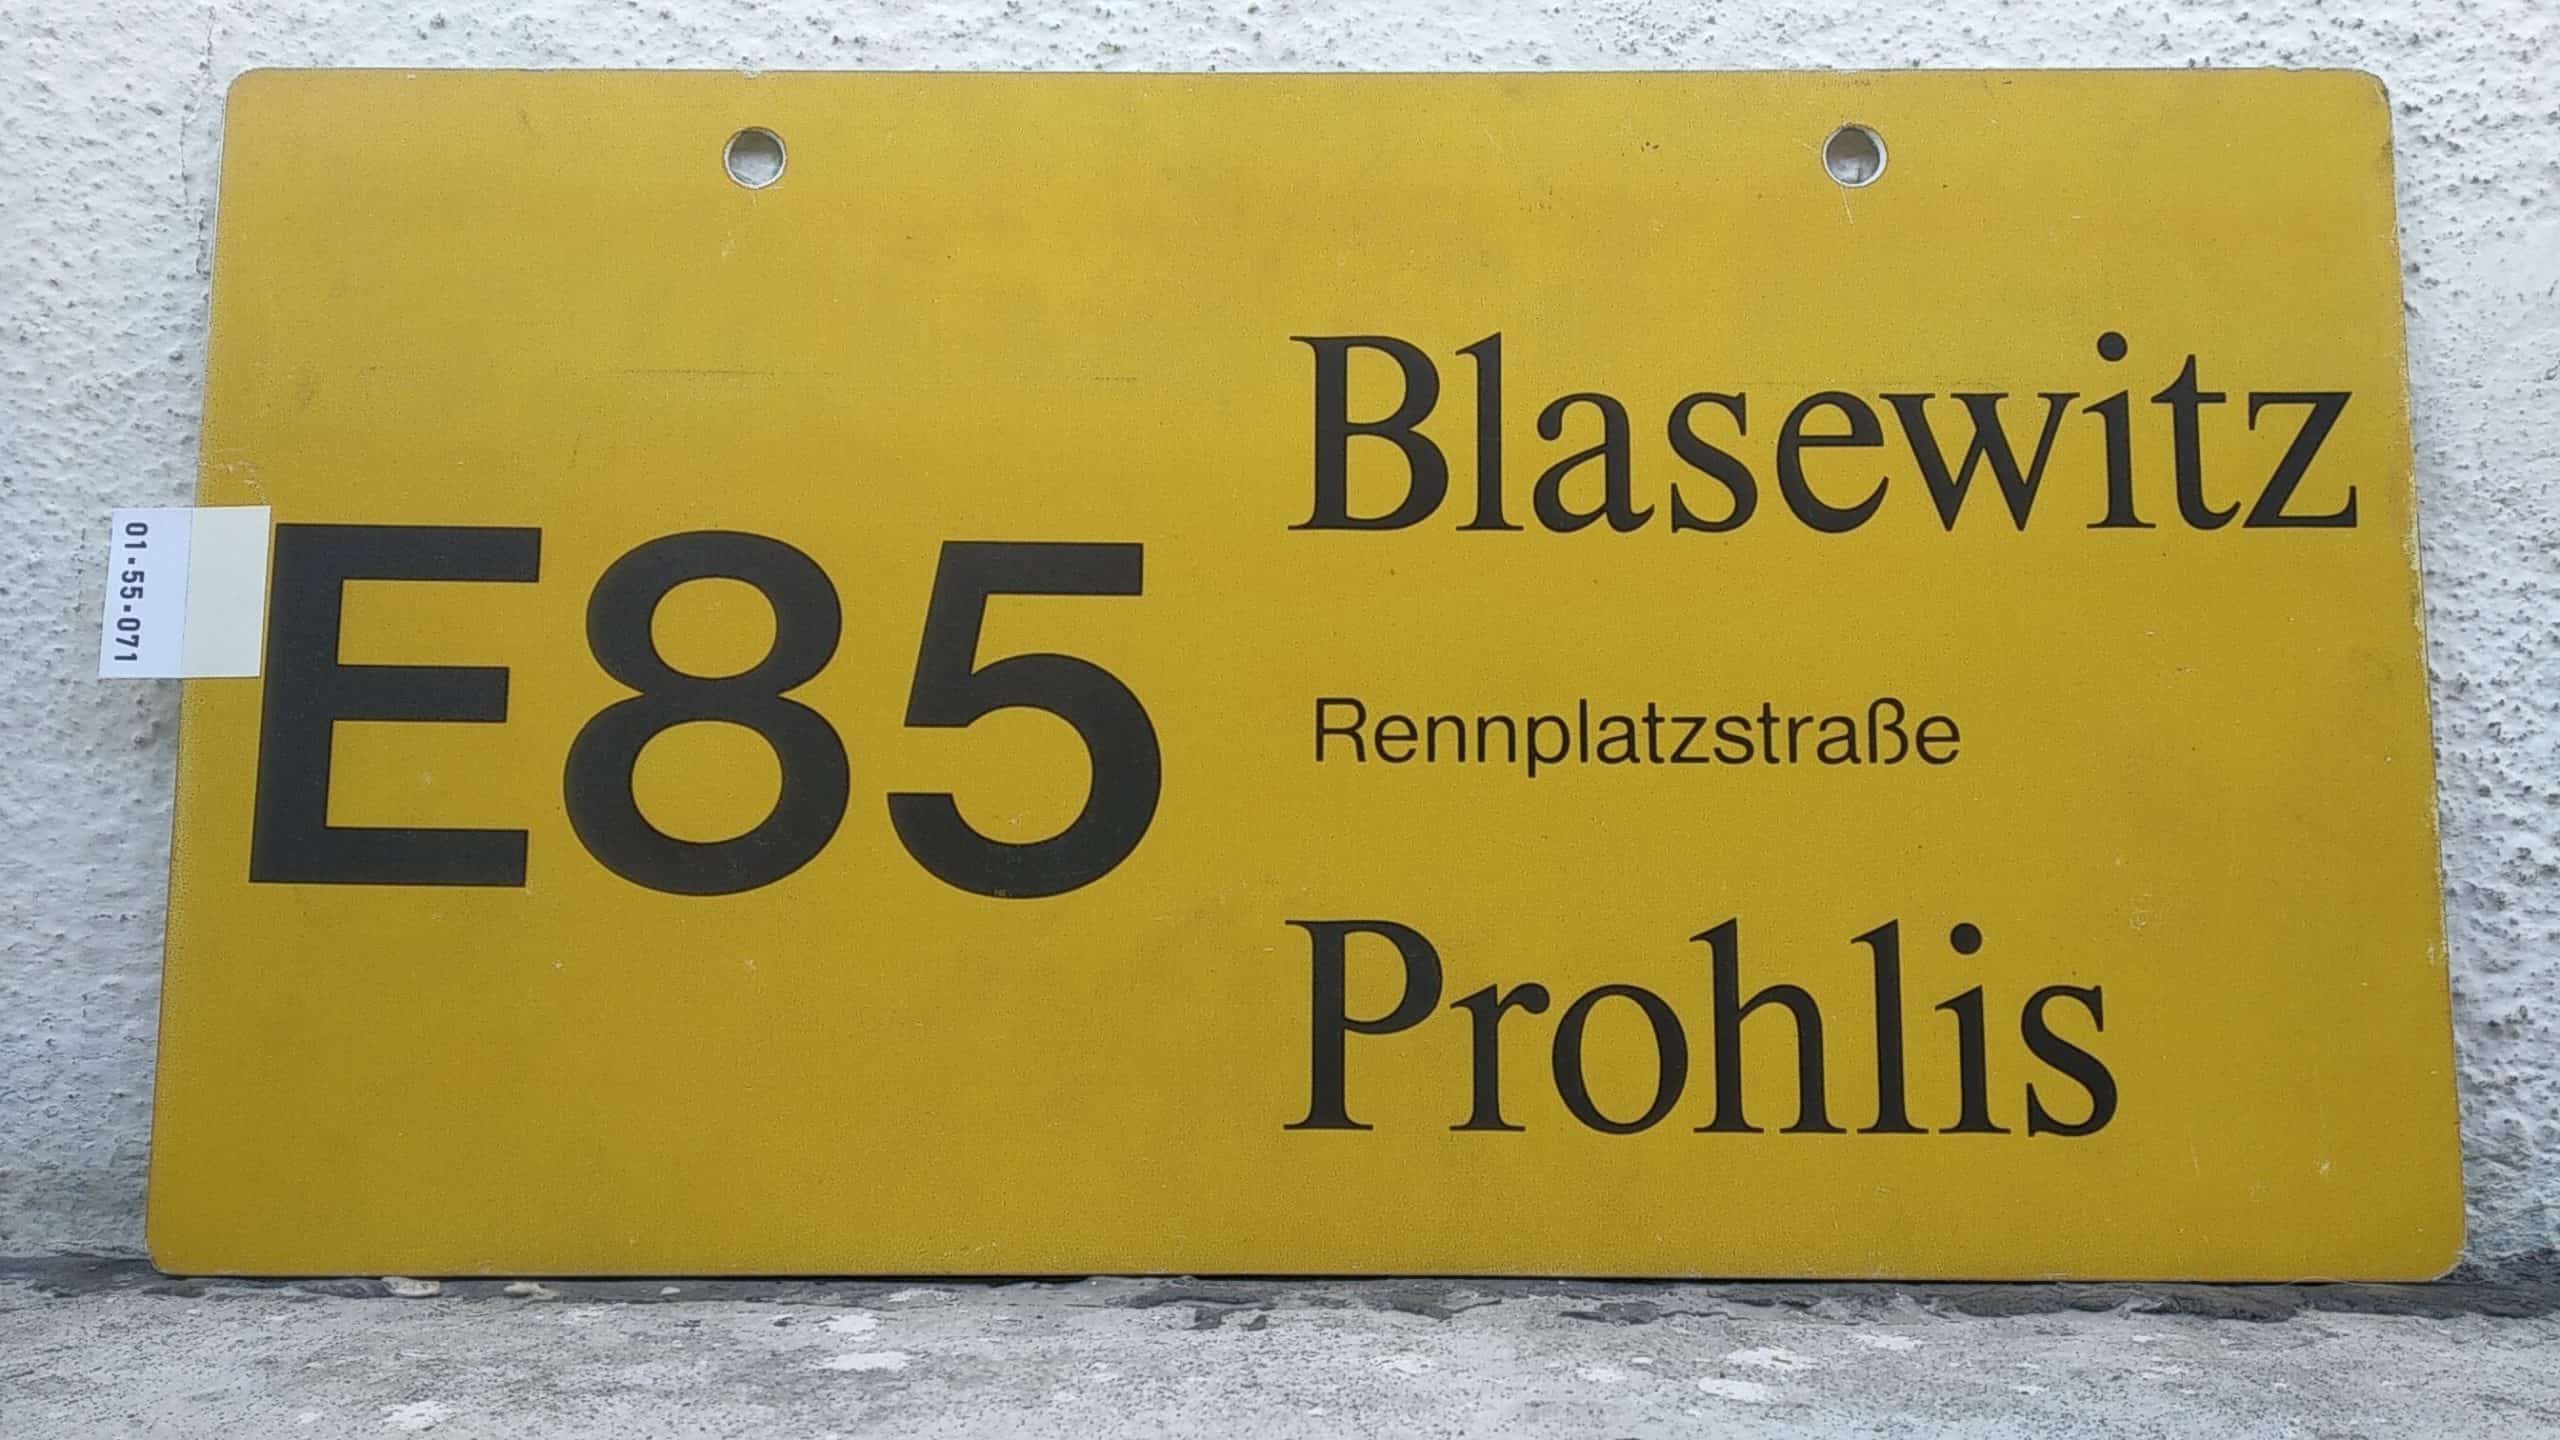 E85 Blasewitz – Prohlis